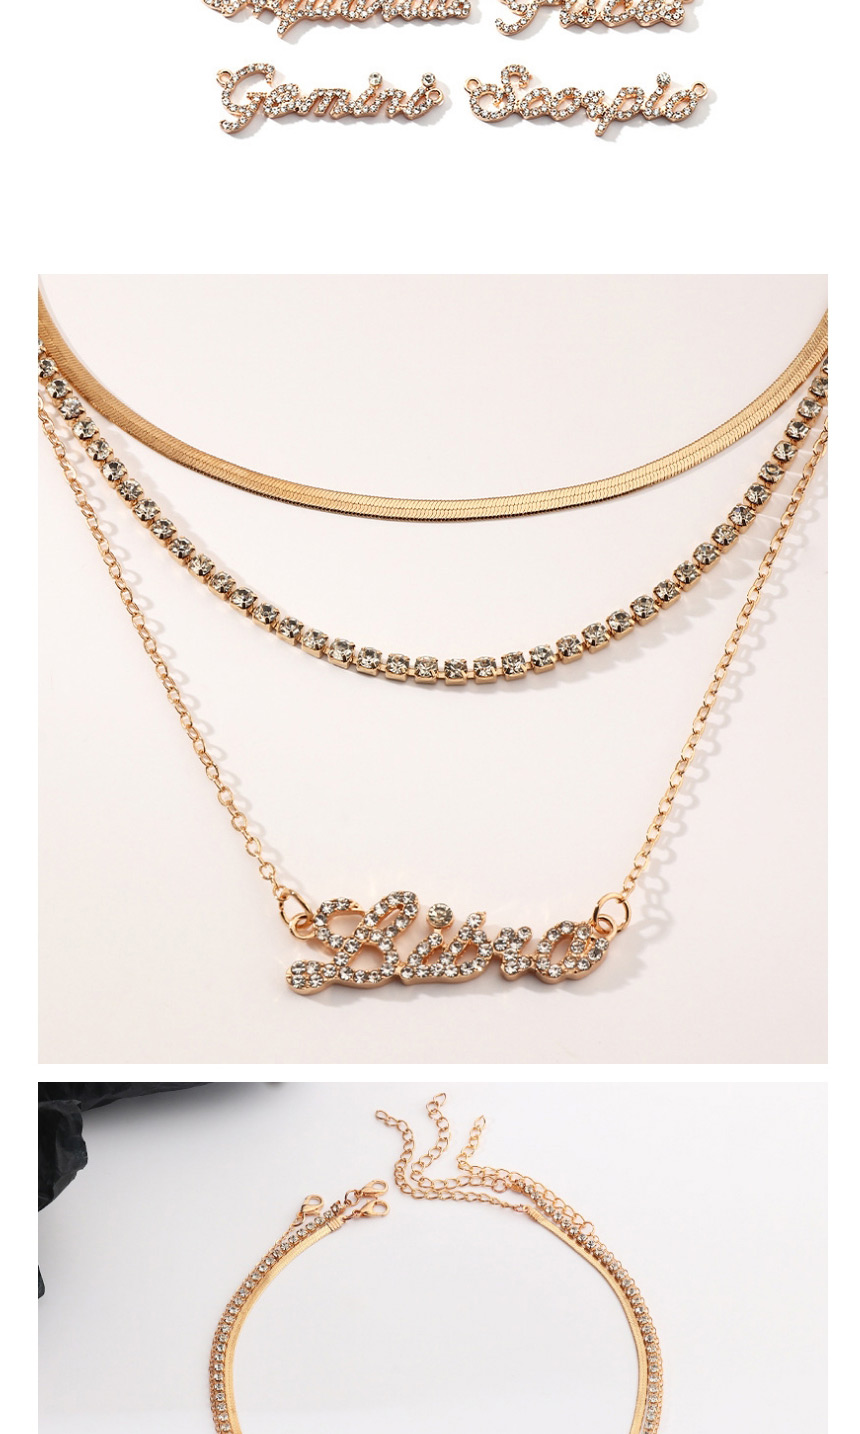 Fashion Sagittarius Twelve Constellation Letters Multilayer Necklace With Diamonds,Pendants